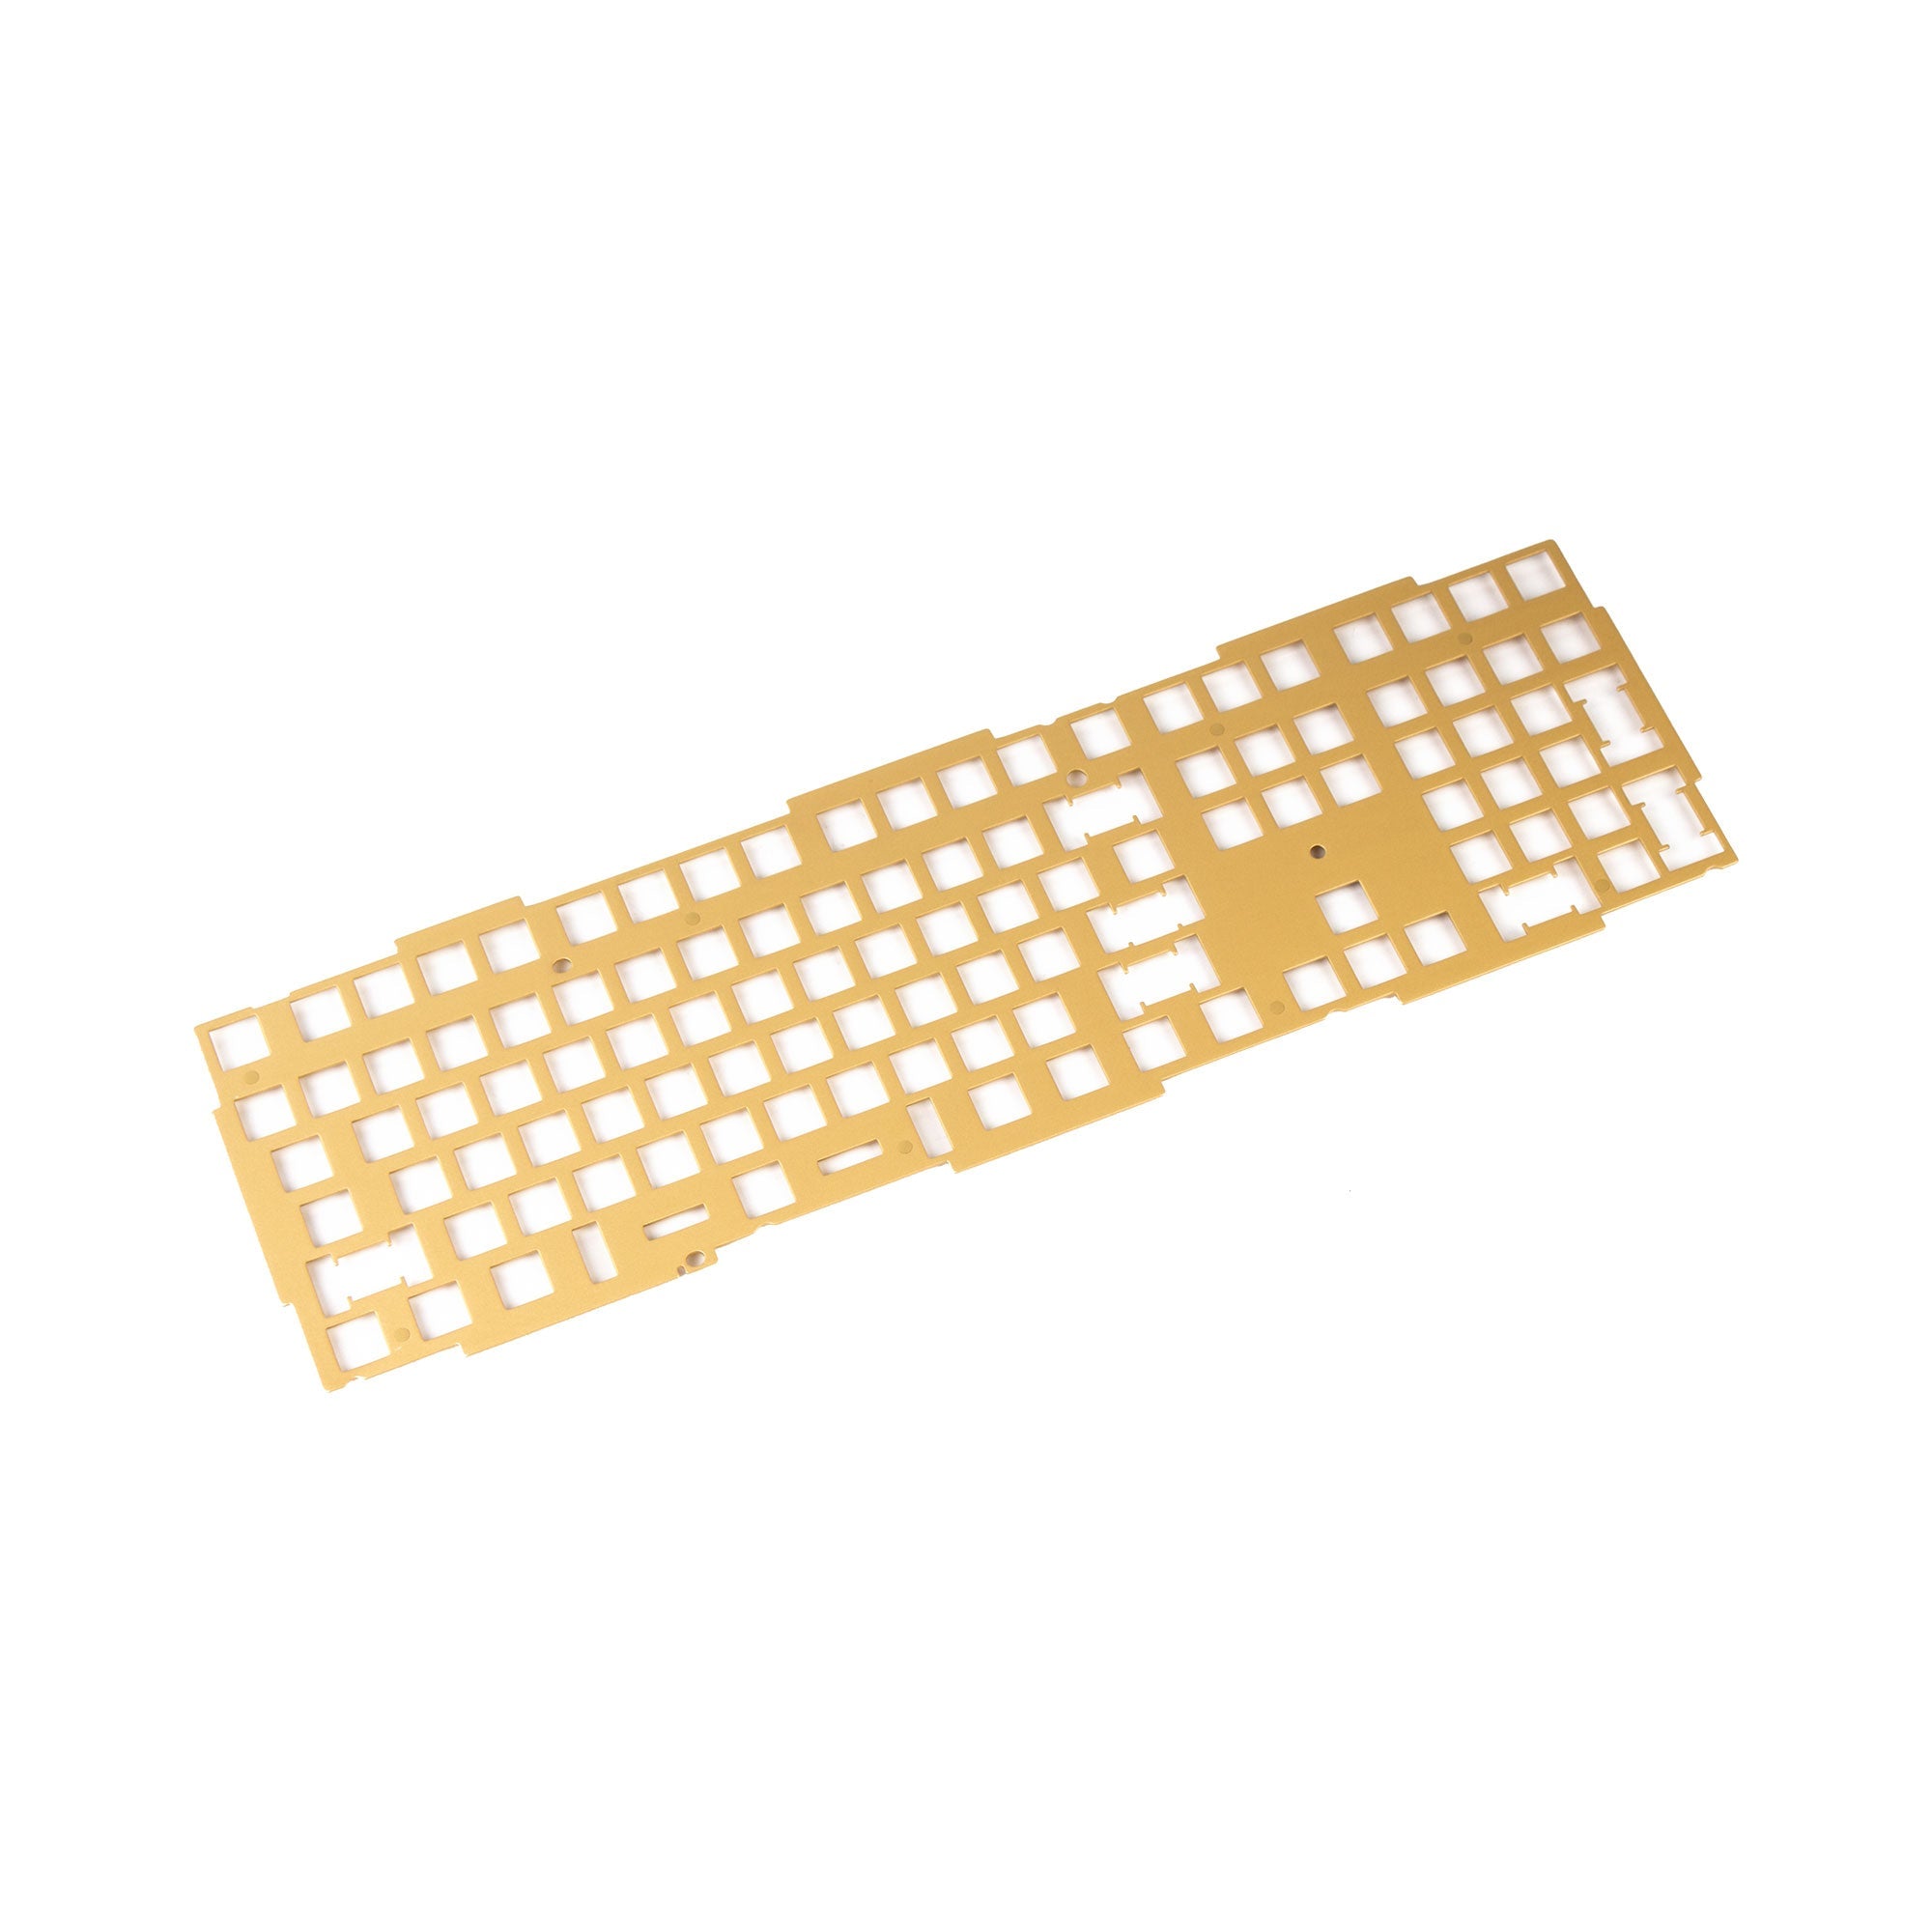 Keychron Q6 Keyboard Brass Plate Knob Version ANSI Layout